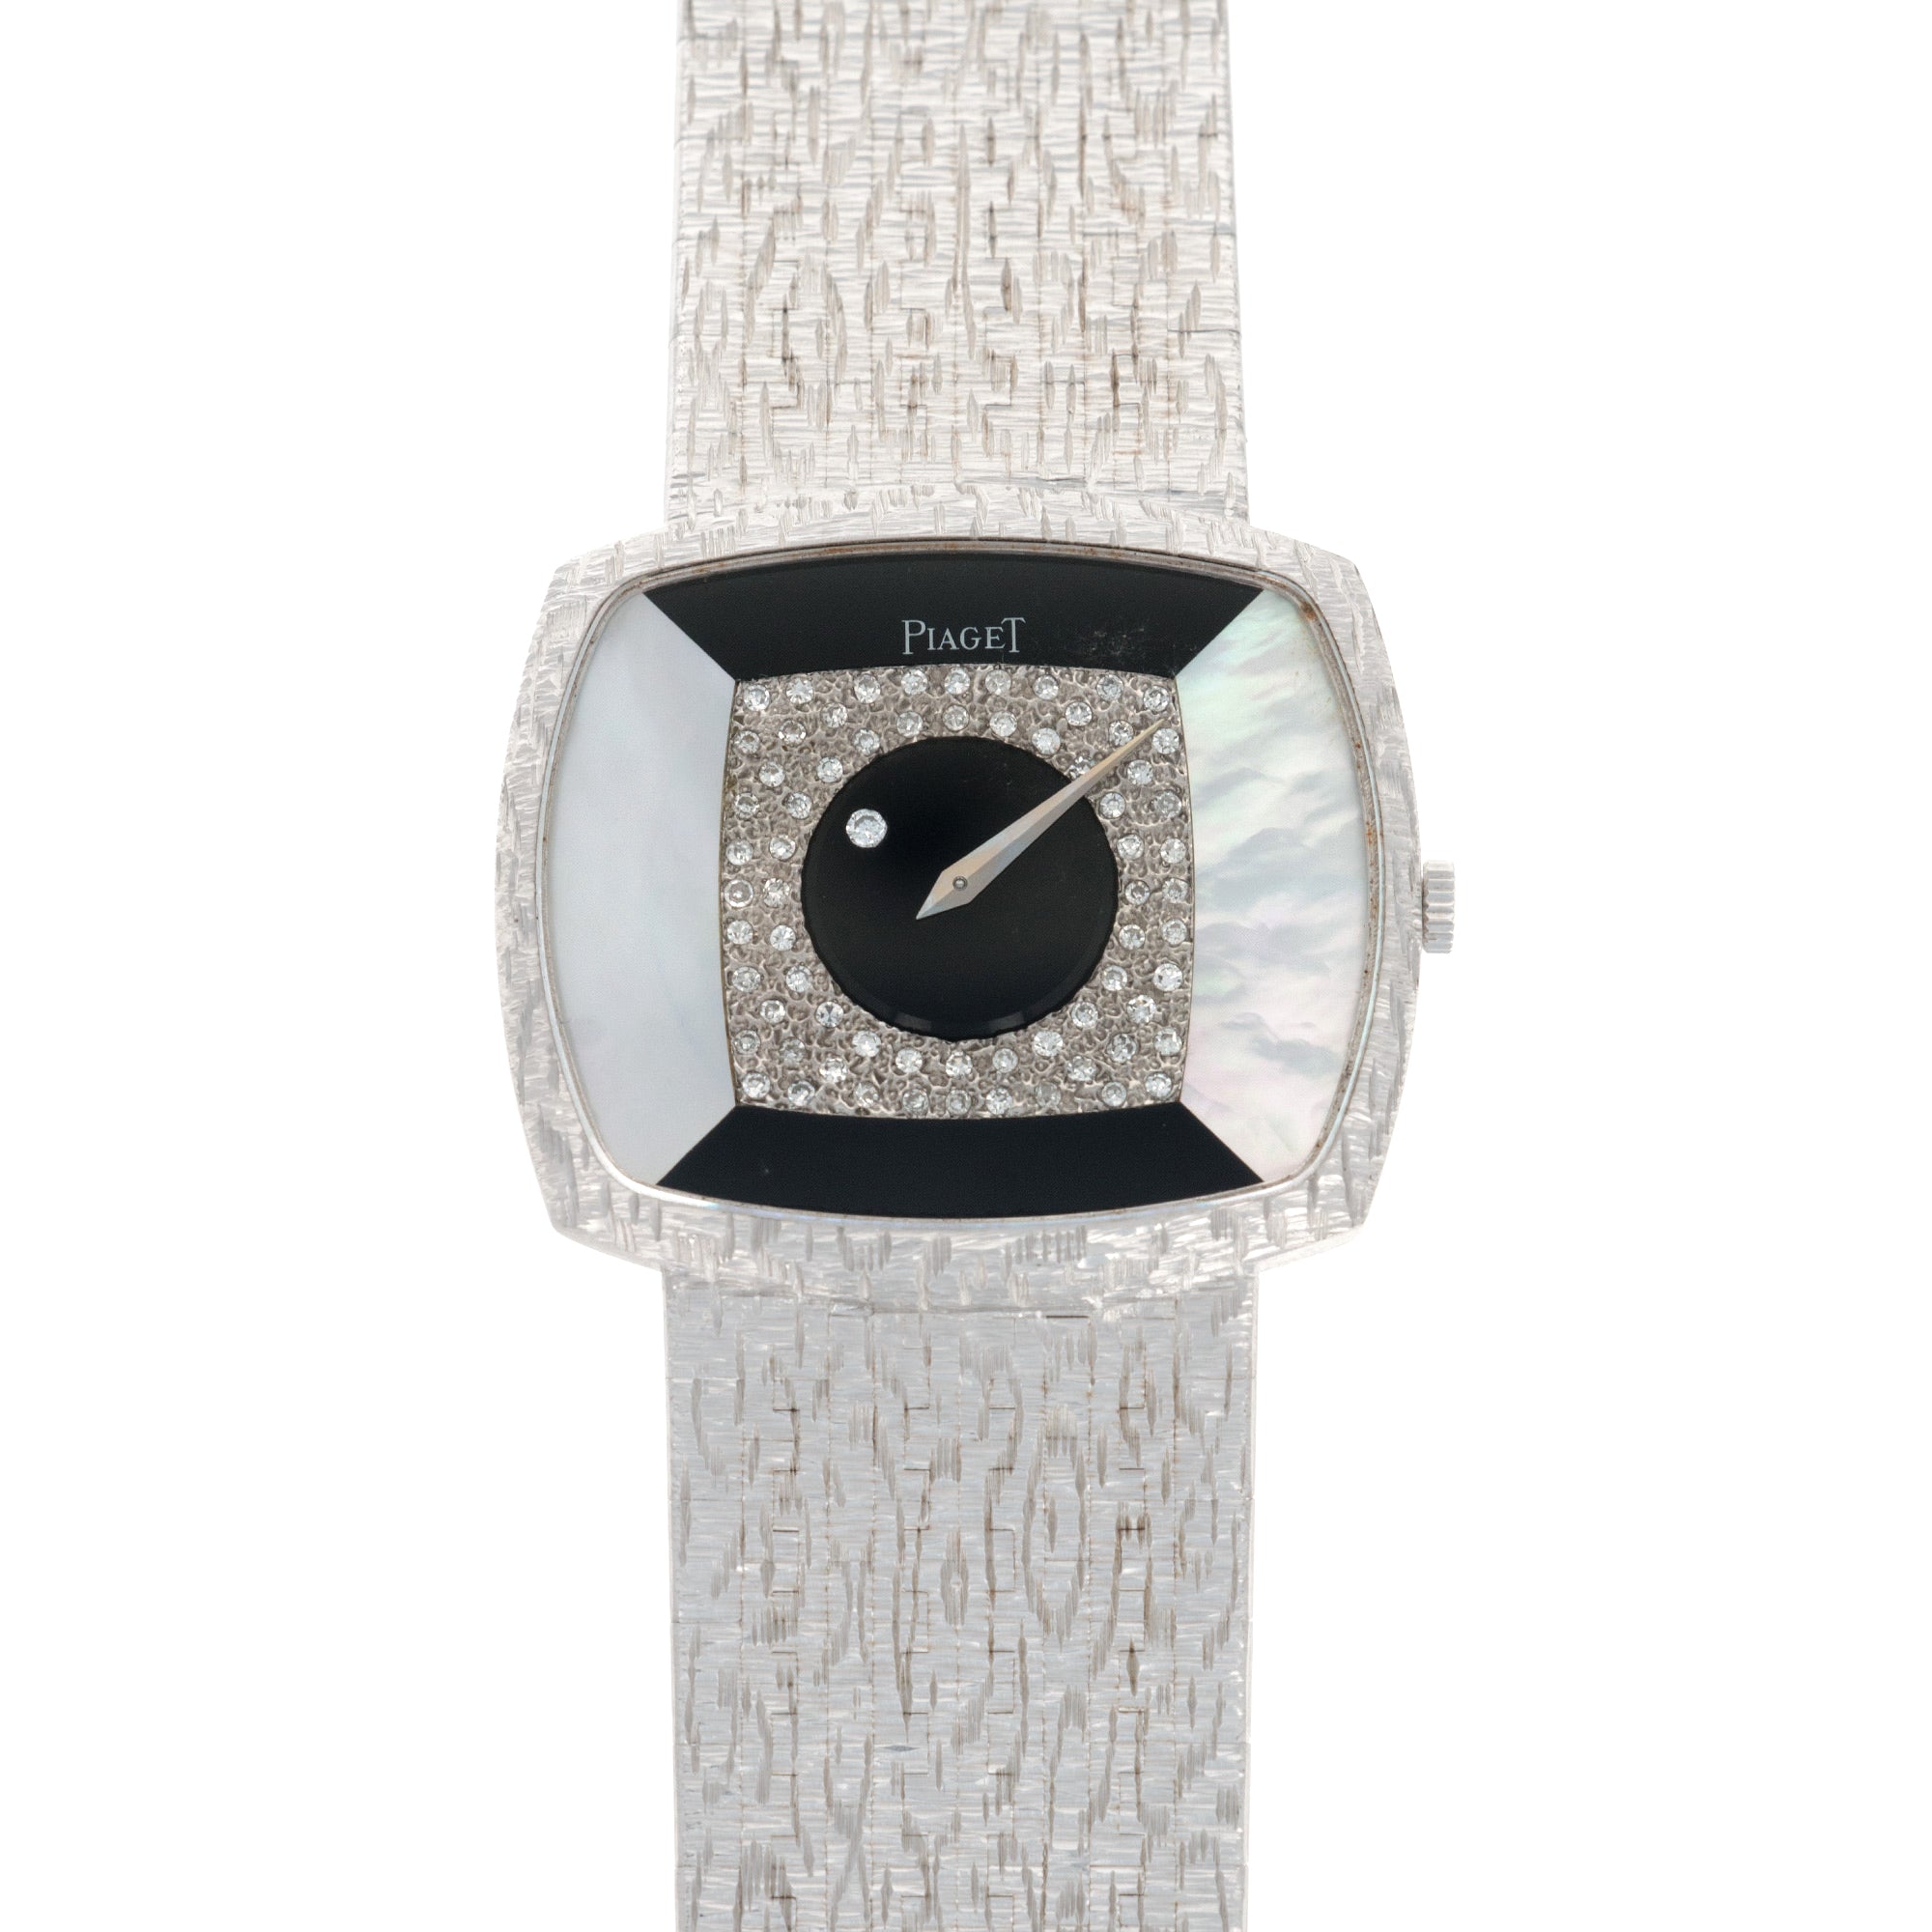 Piaget - Piaget White Gold Mystery Diamond Watch - The Keystone Watches